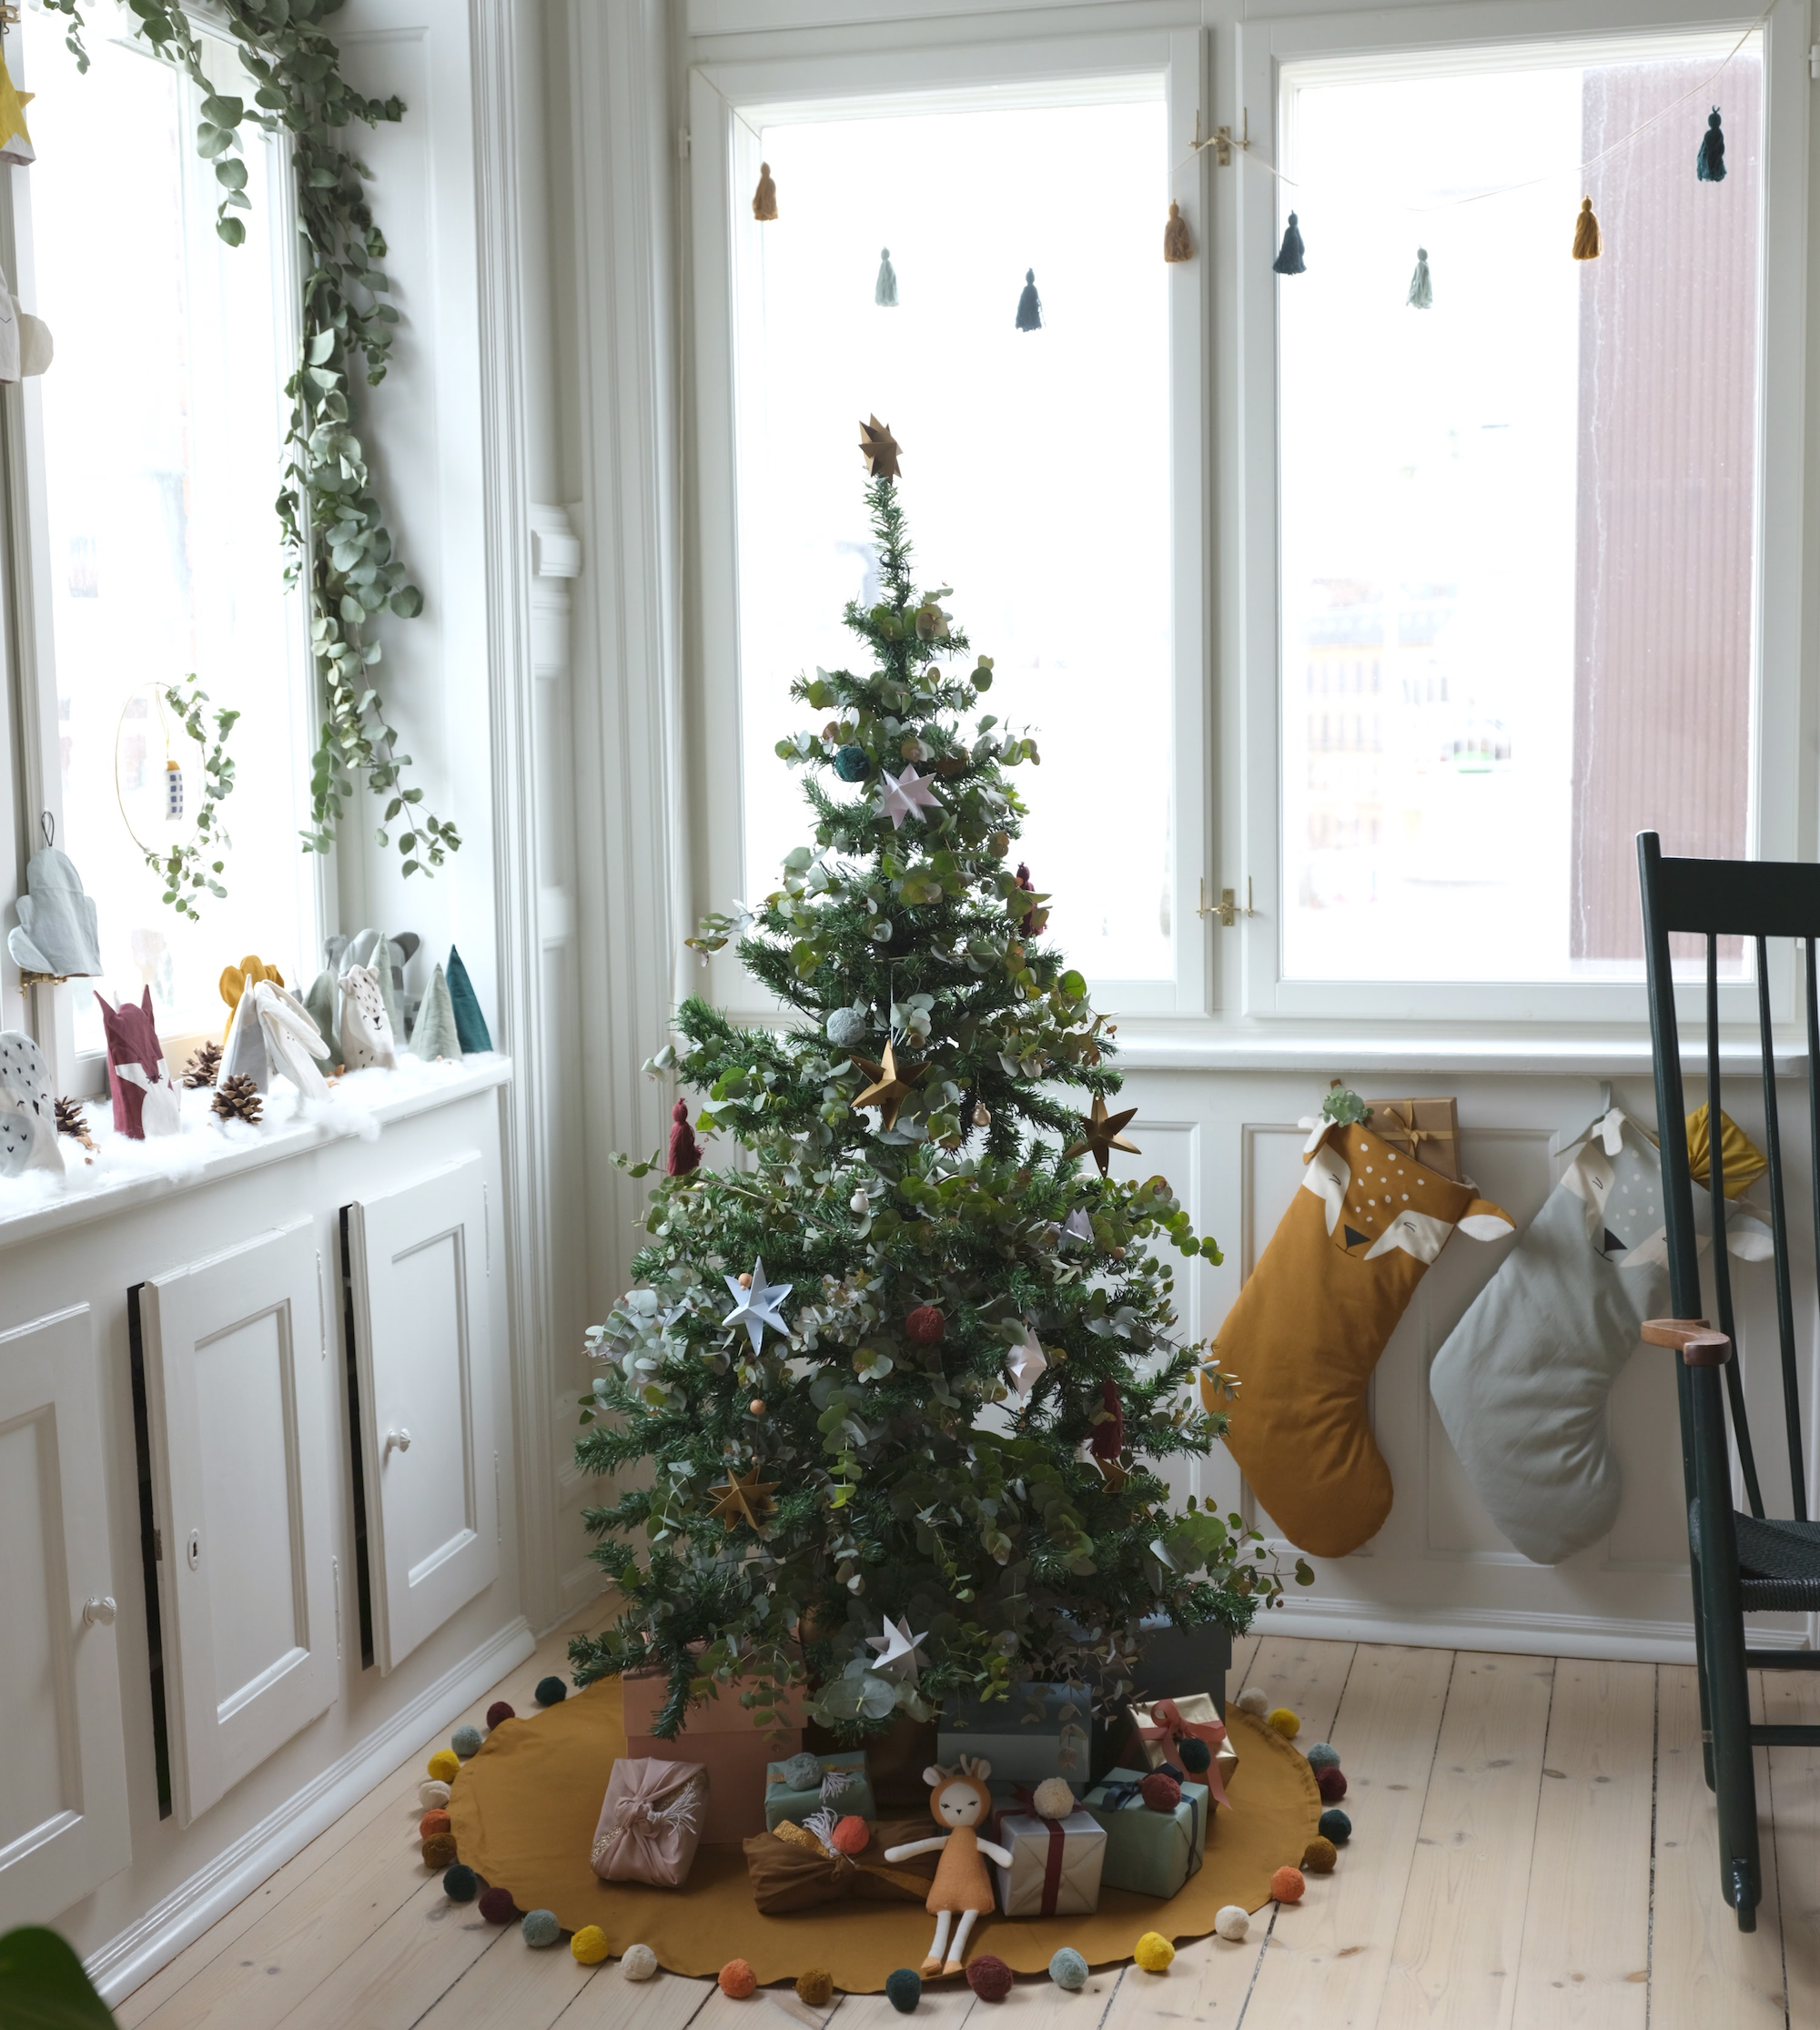 How To Get That Scandinavian Christmas Tree Look This Festive Season